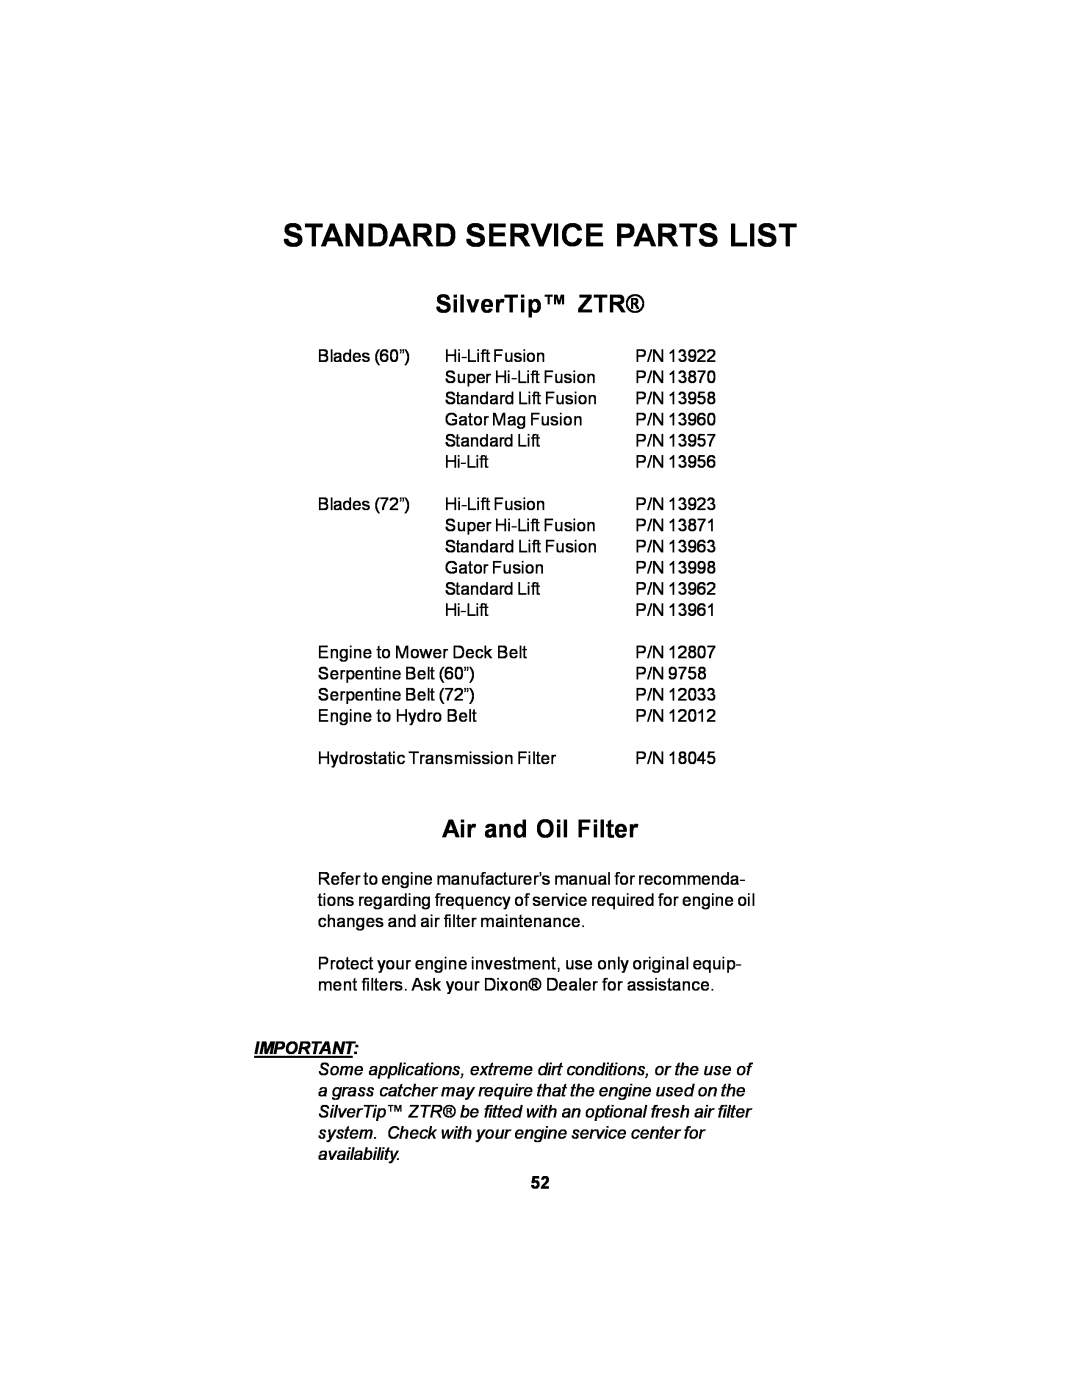 Dixon 12881-106 manual Standard Service Parts List, SilverTip ZTR, Air and Oil Filter 